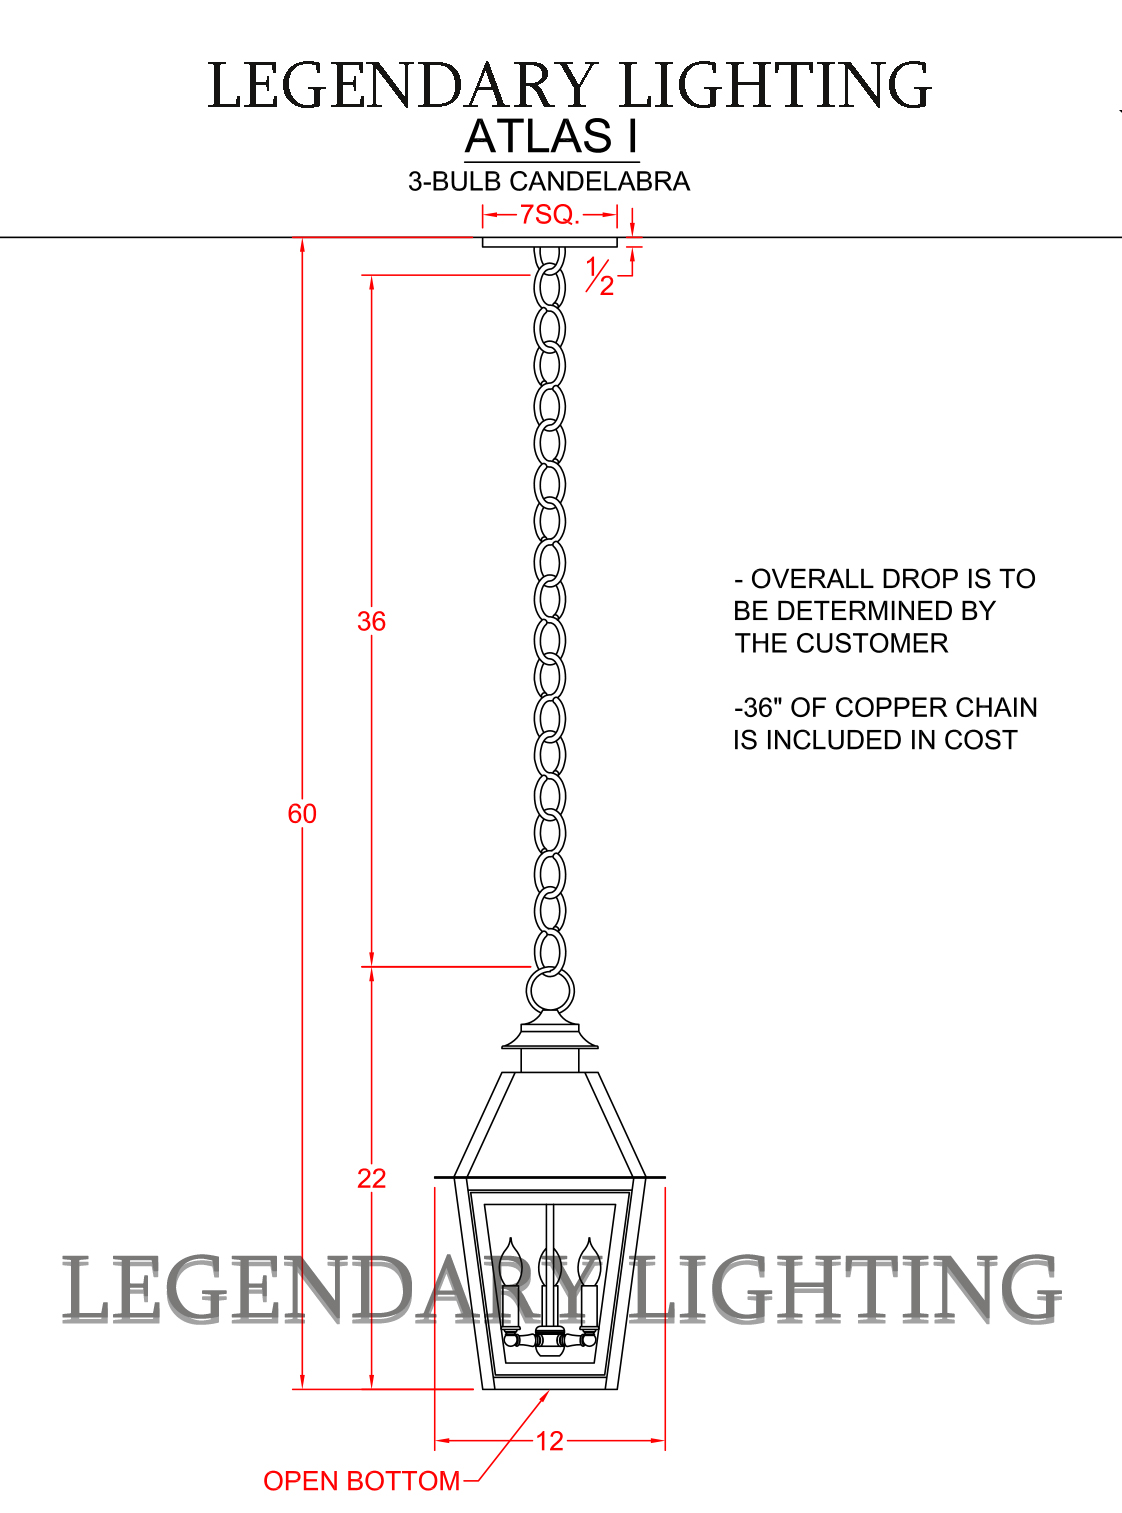 Atlas - Legendary Lighting Gas & Electric Lanterns